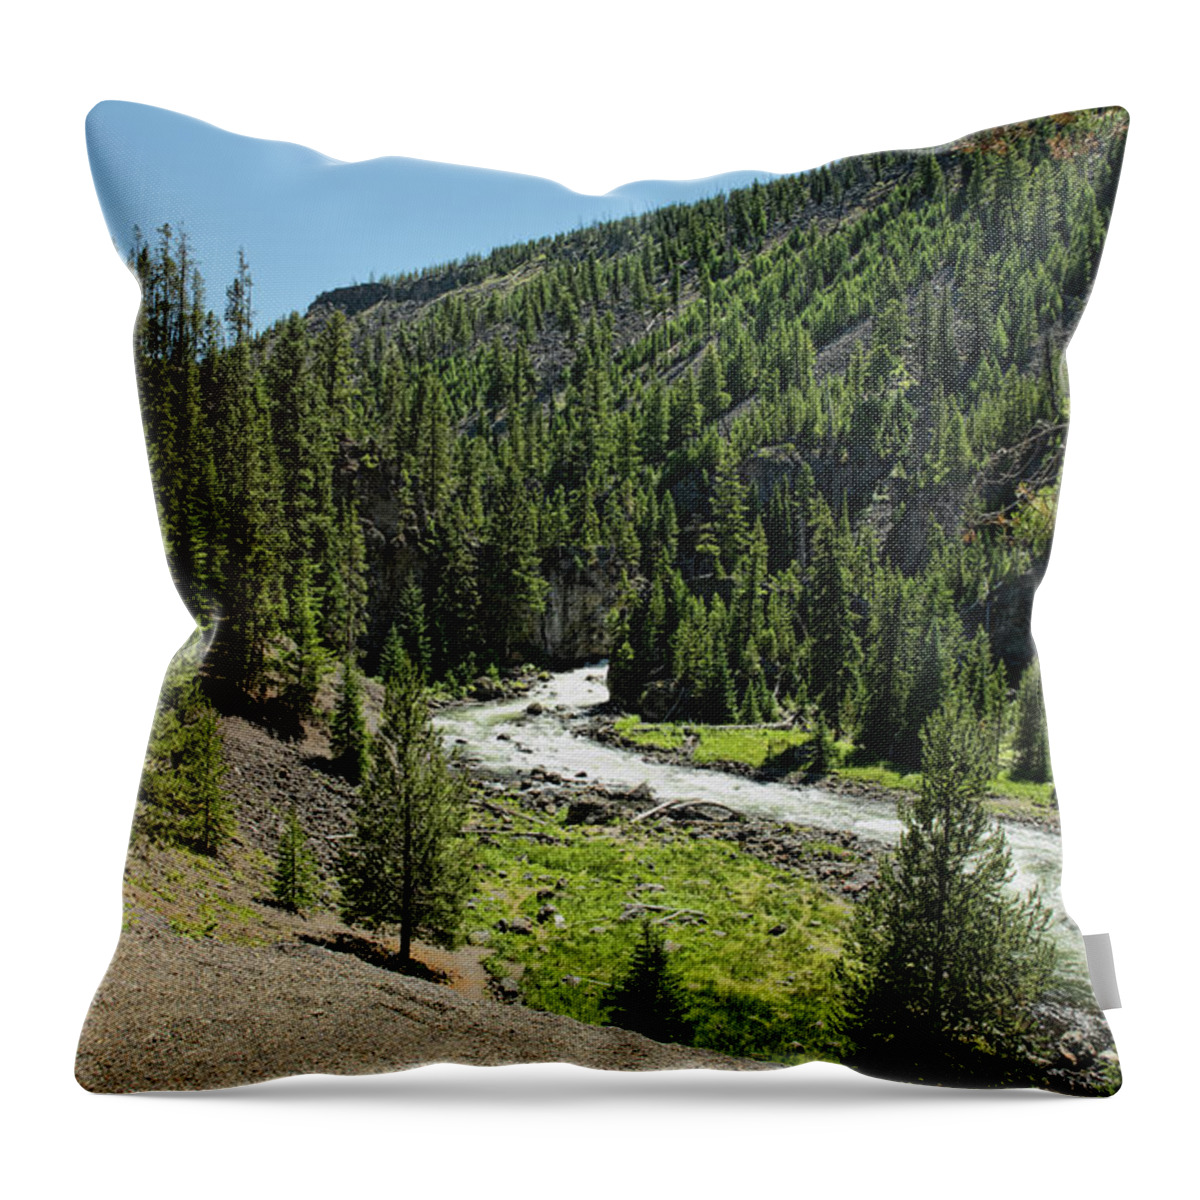 Montana Throw Pillow featuring the photograph Firehole River by Joe Granita